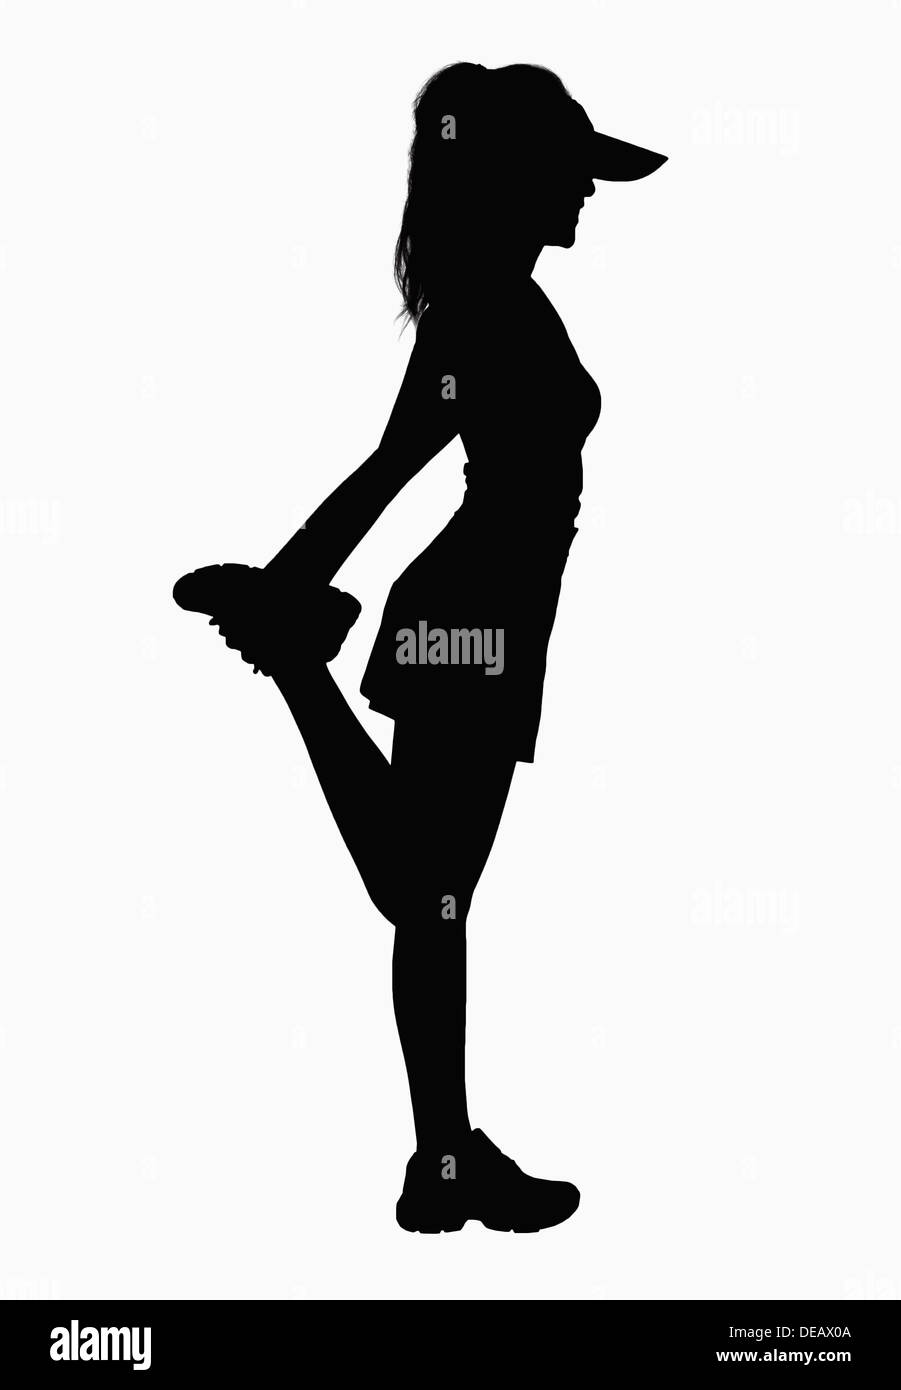 Silhouette of woman stretching leg. Stock Photo